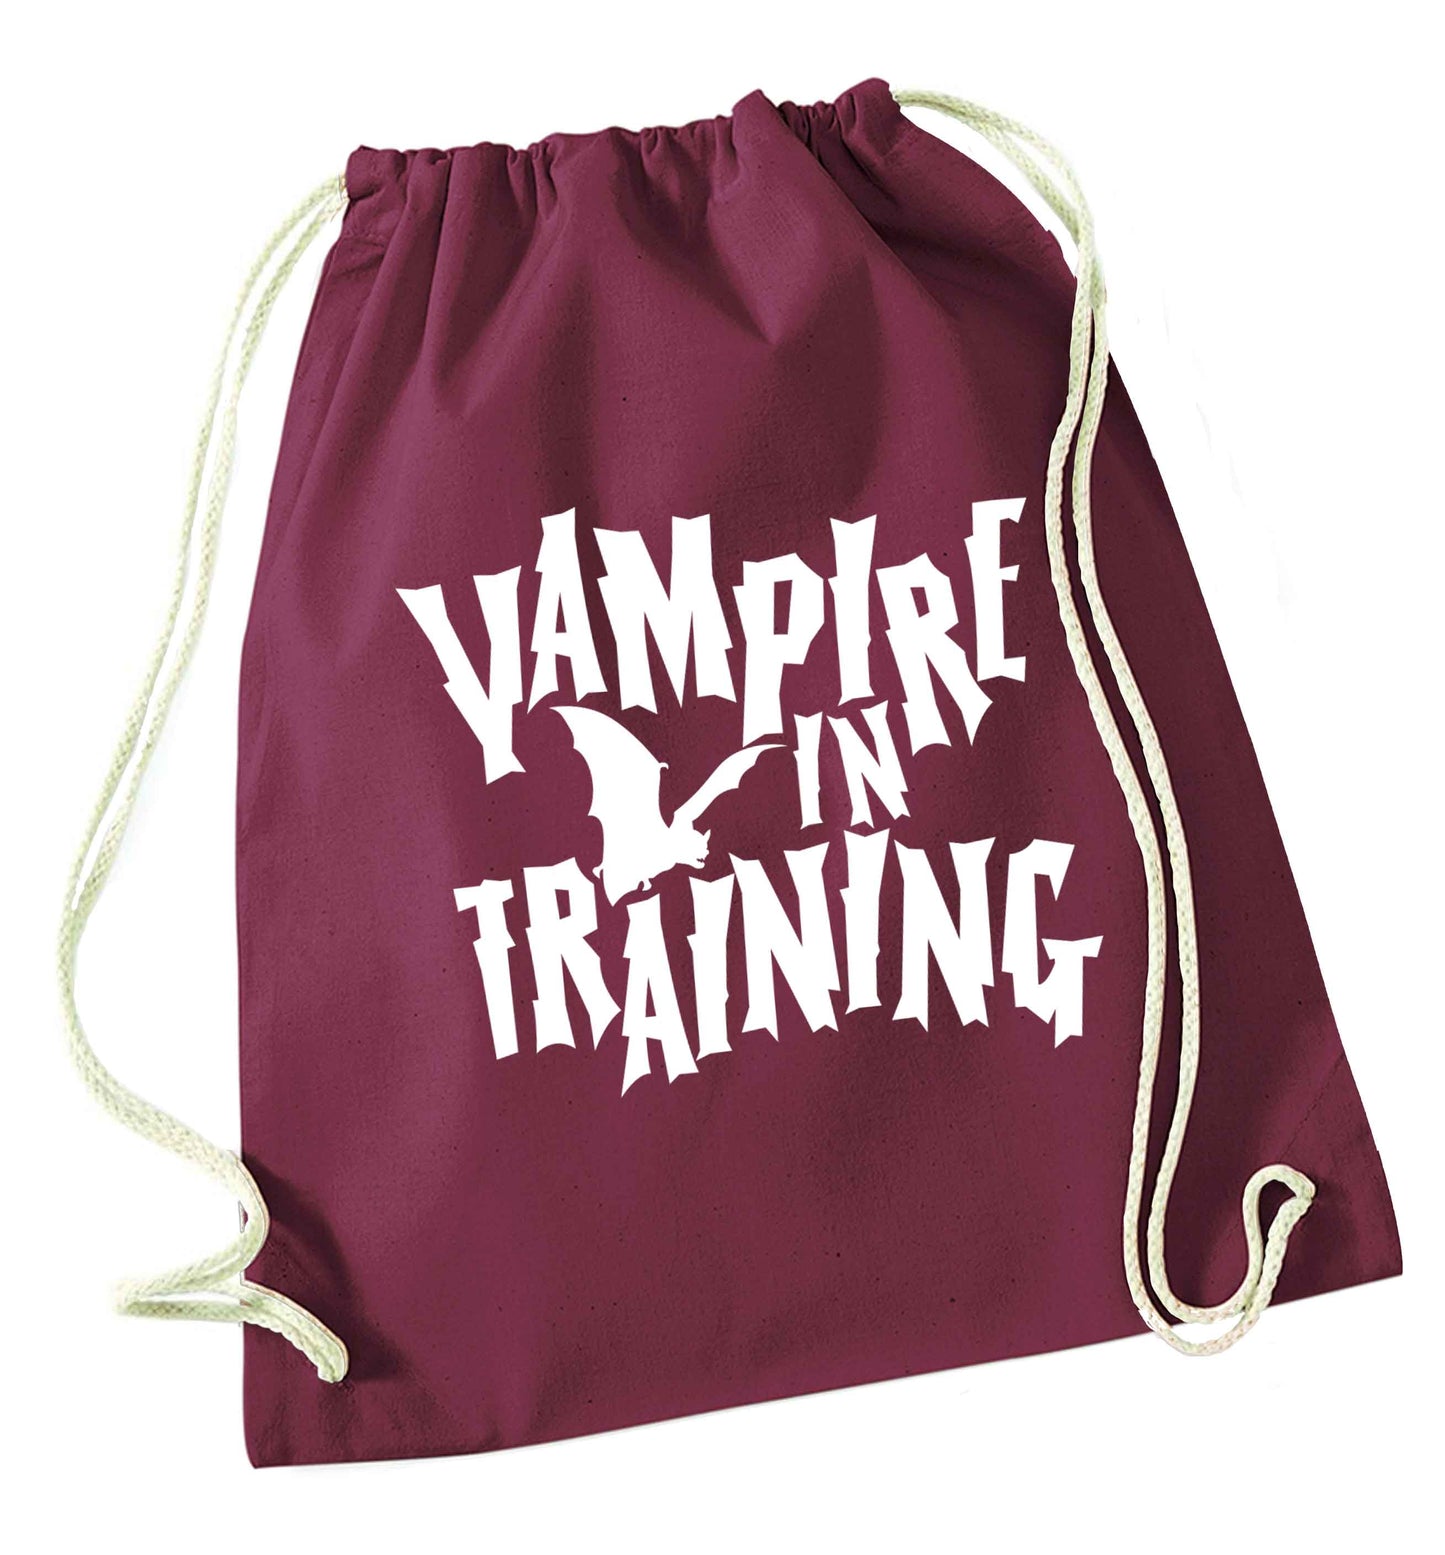 Vampire in training maroon drawstring bag